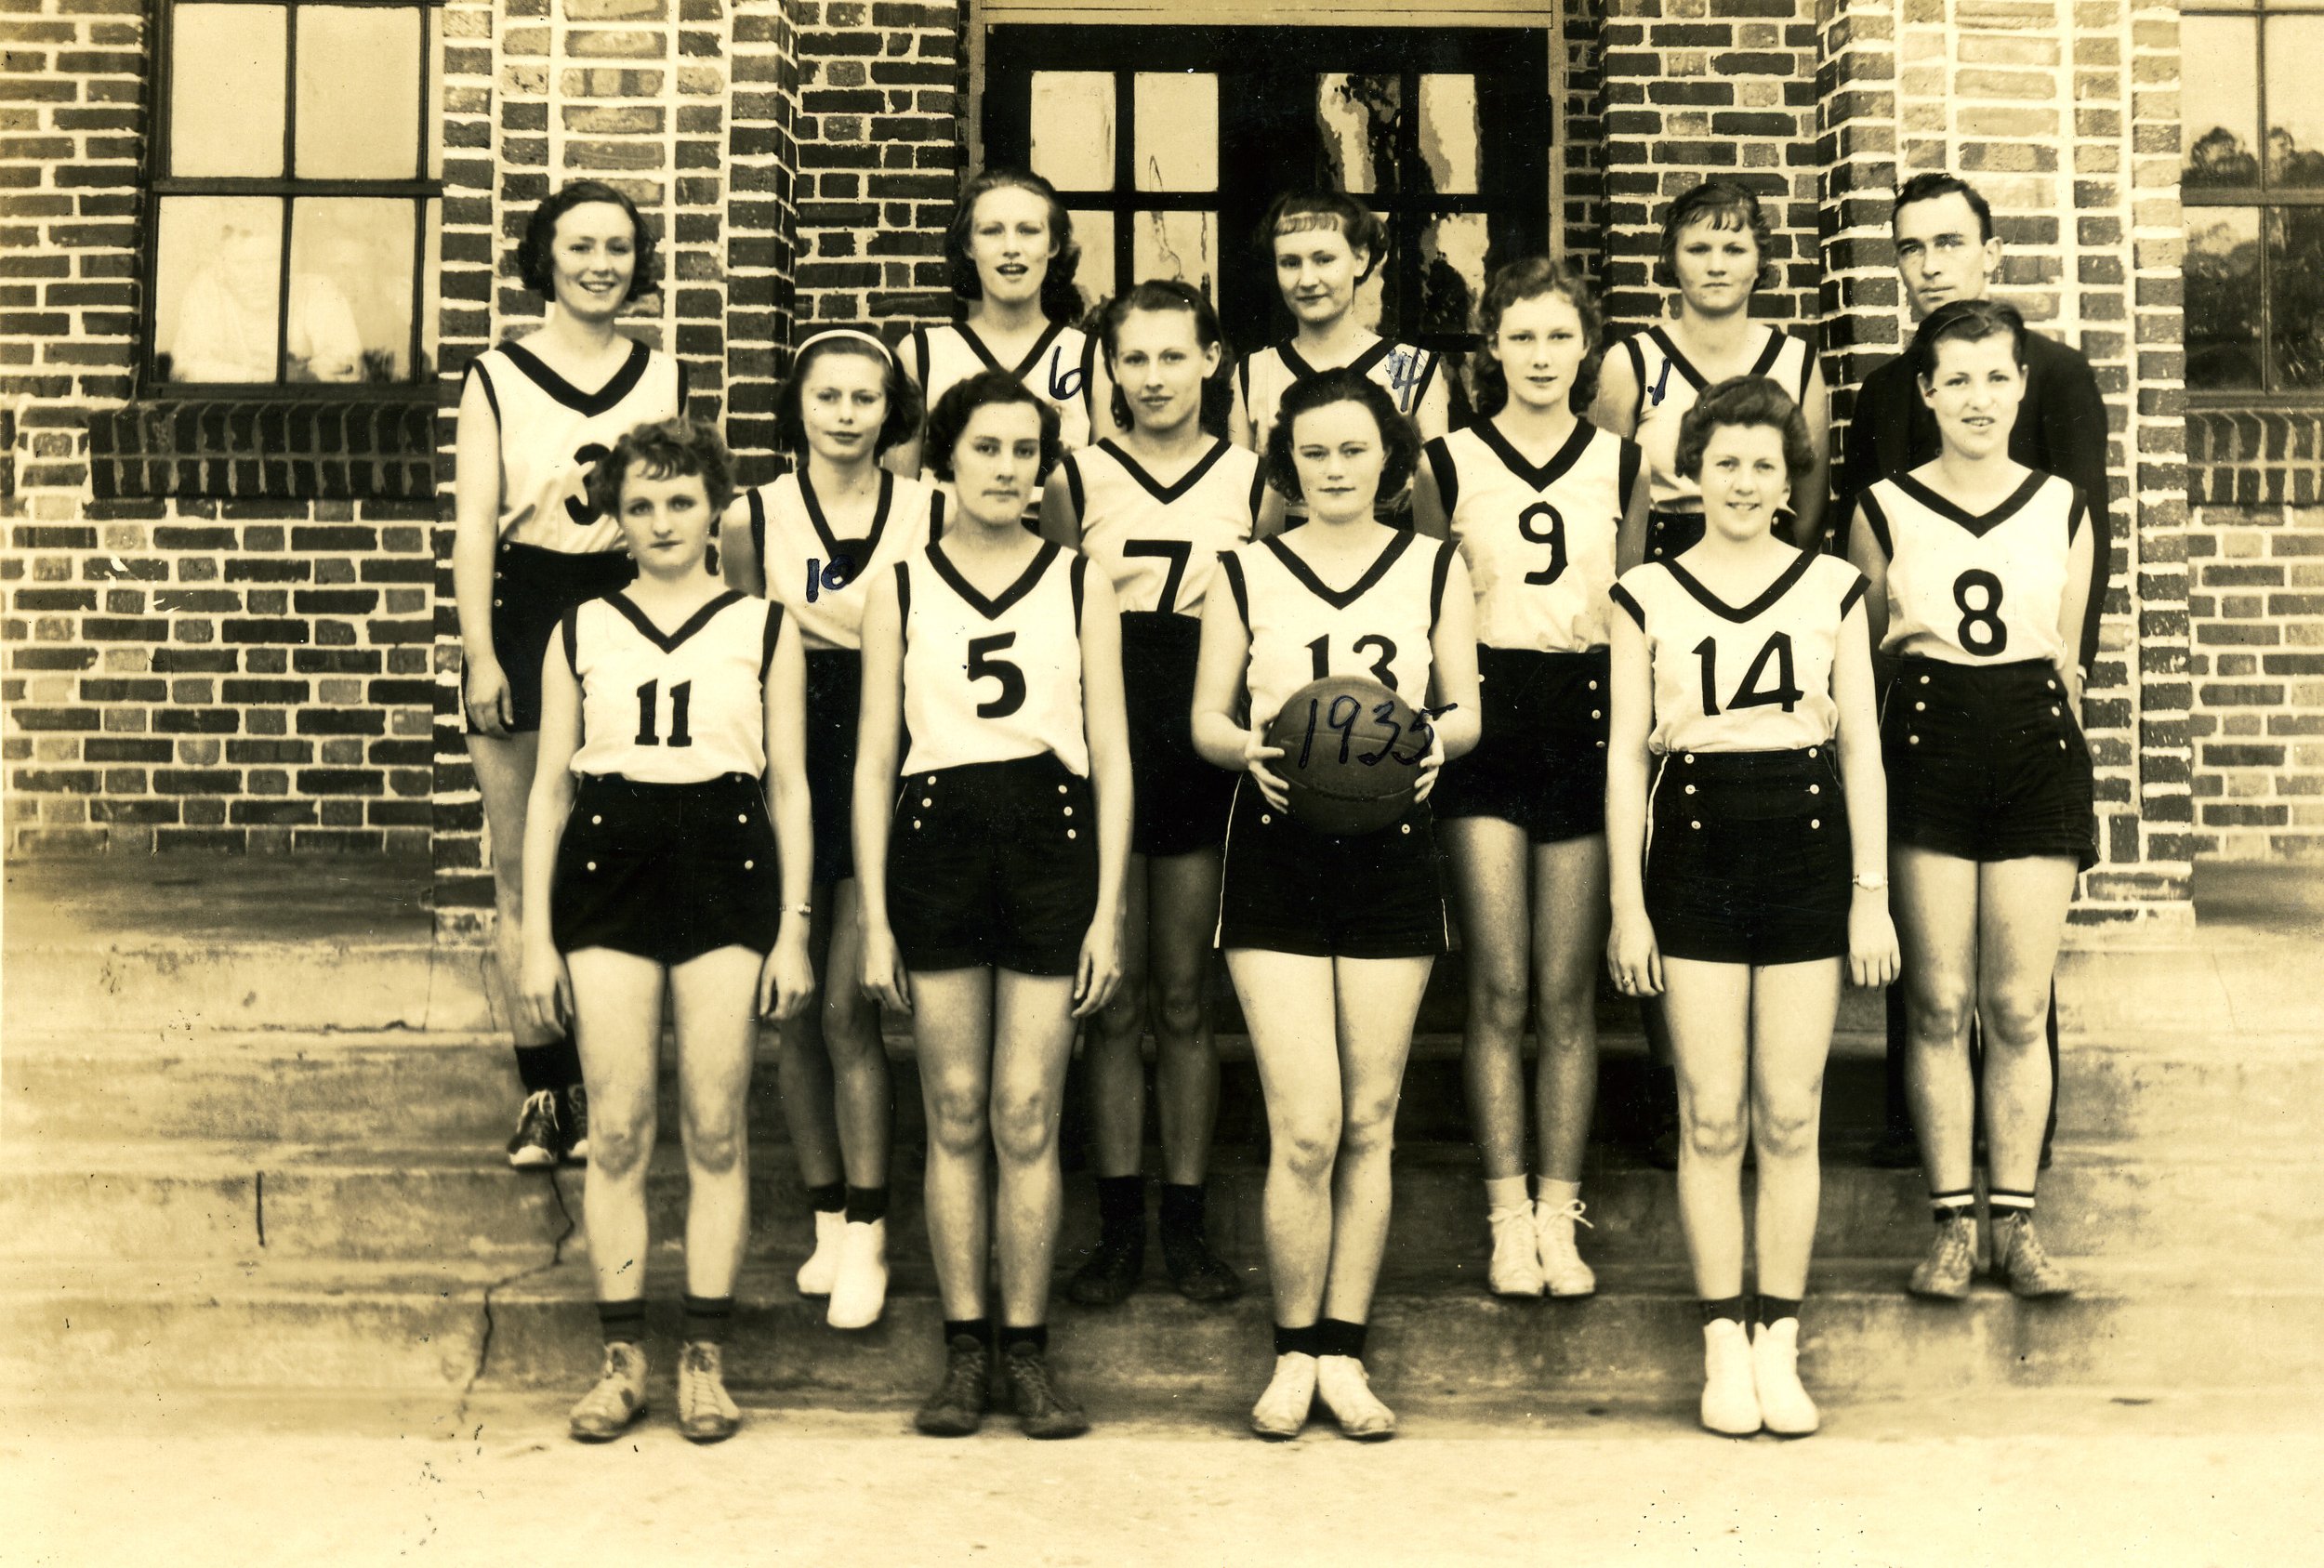 Smyrna women's basketball team, 1935